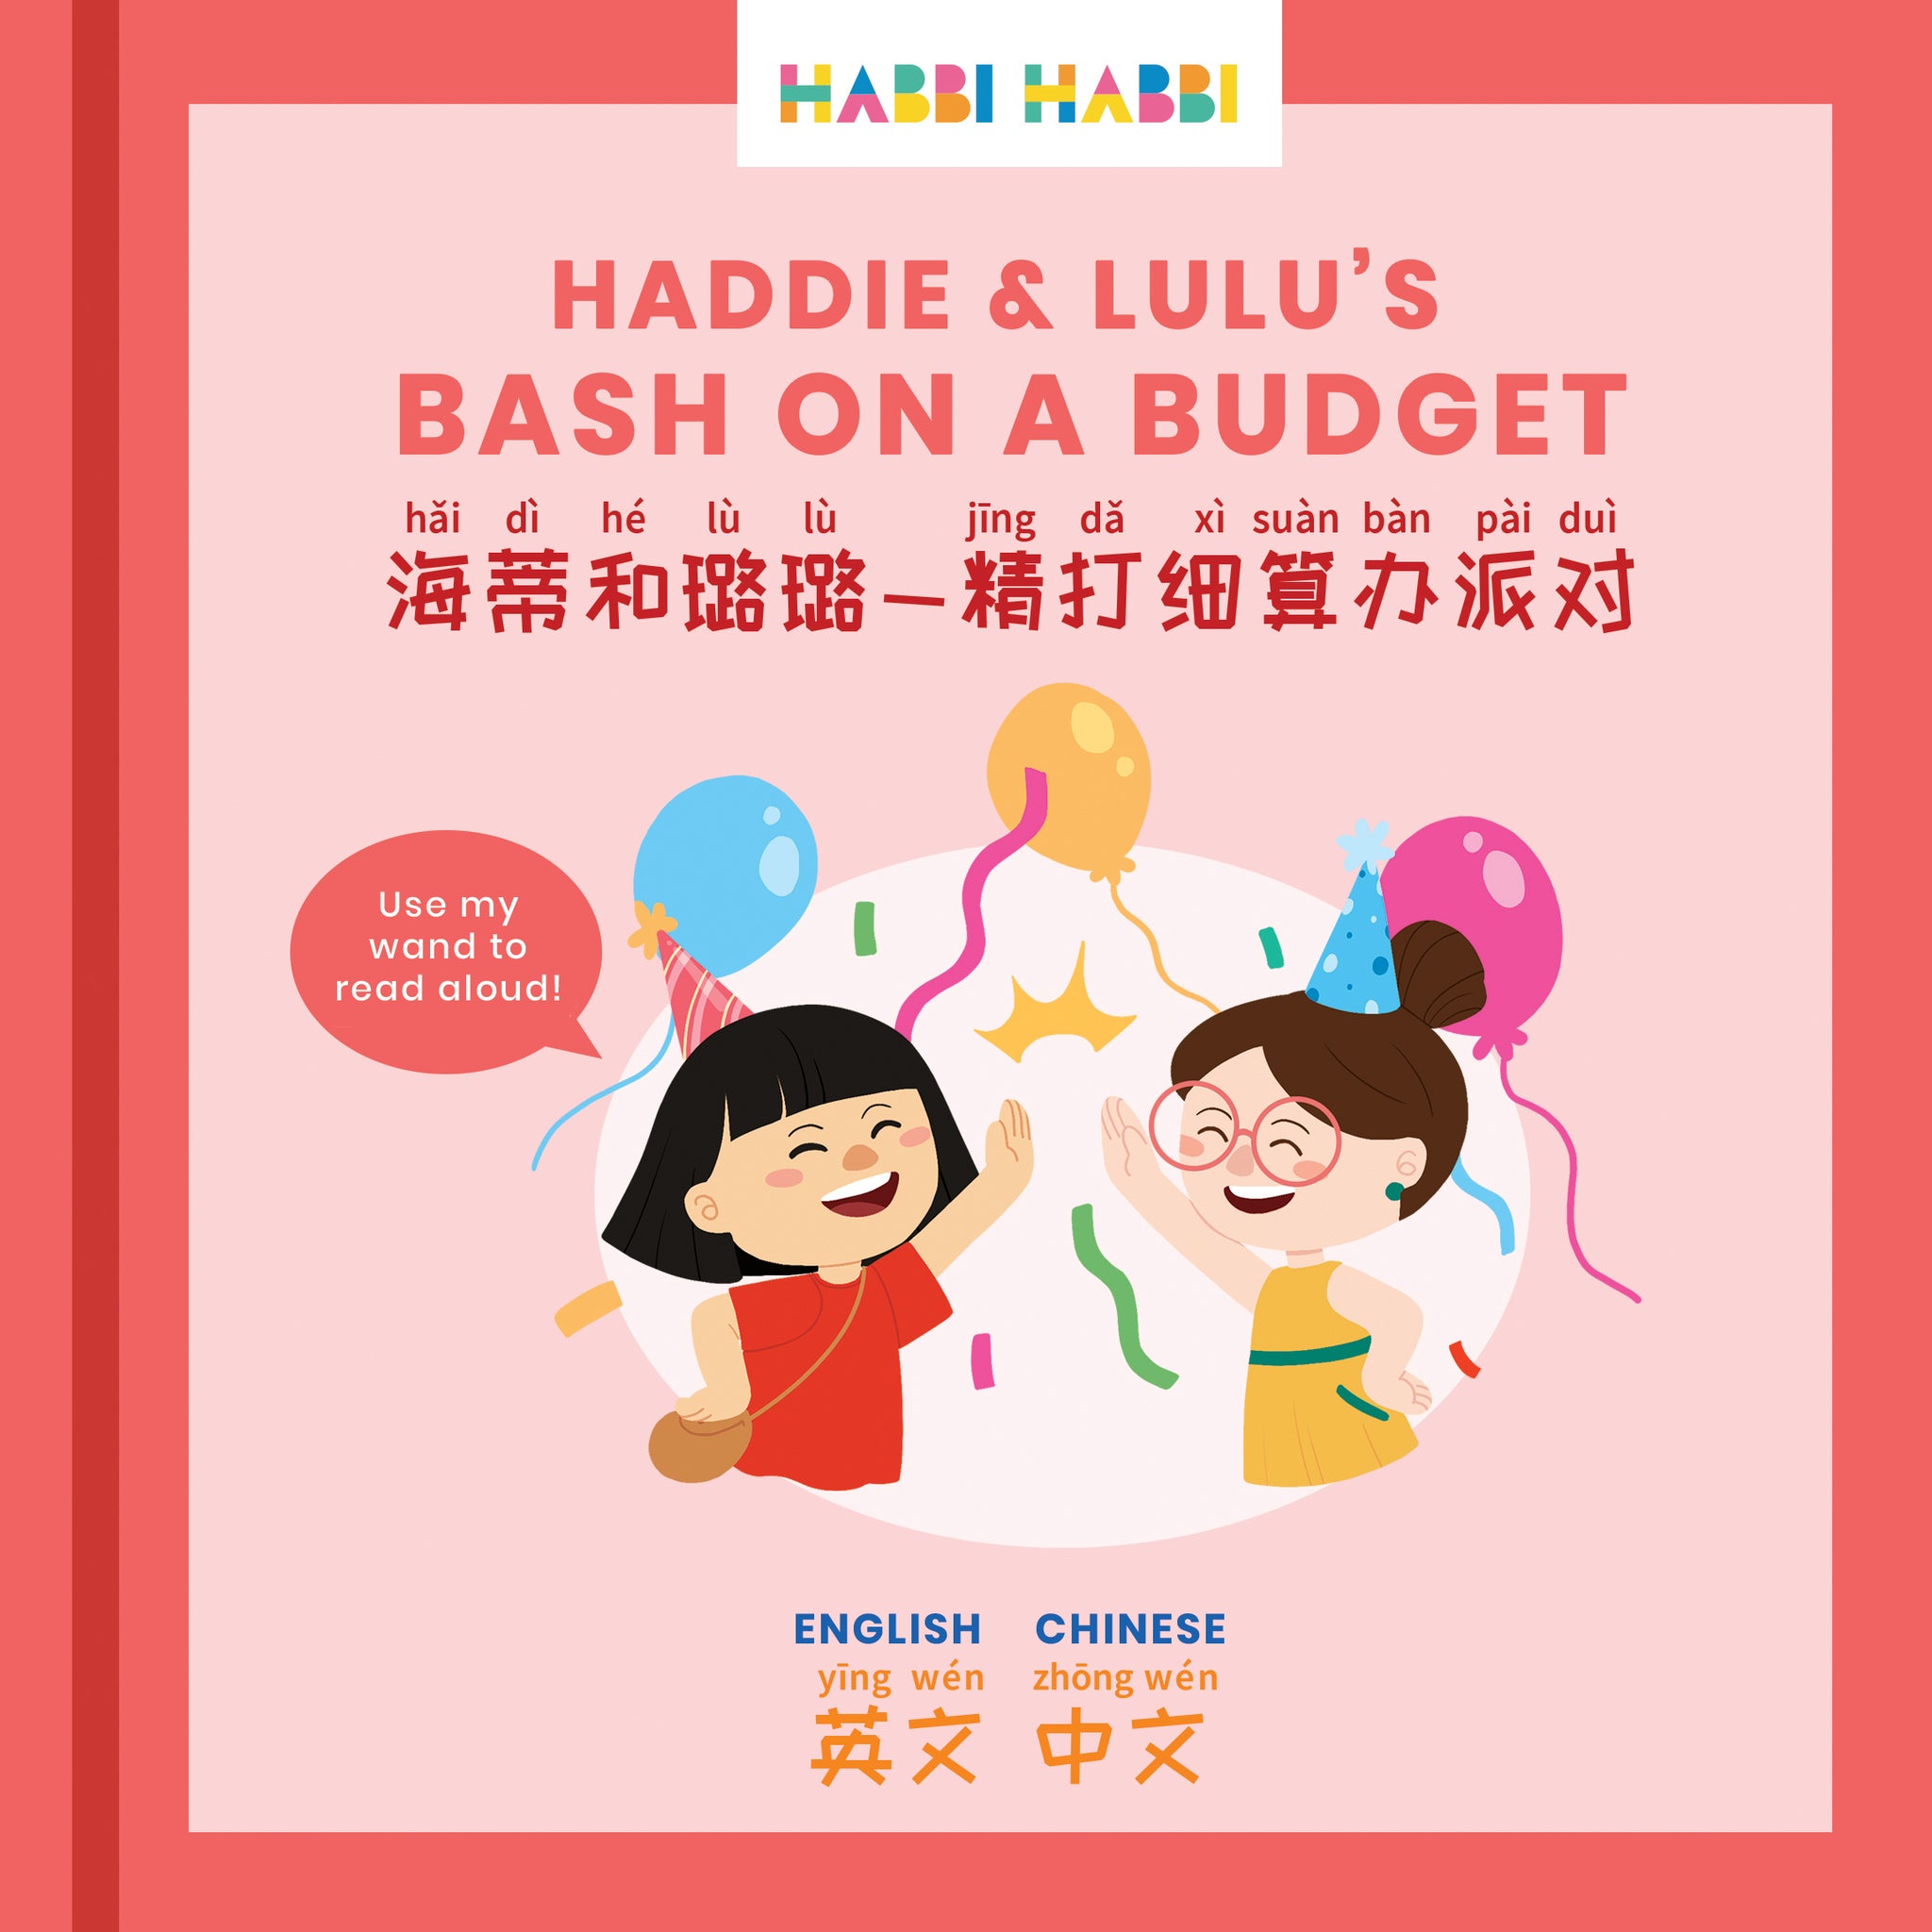 Stories For Kids In Chinese Spanish Haddie Lulu S Bash On A Budget Habbi Habbi